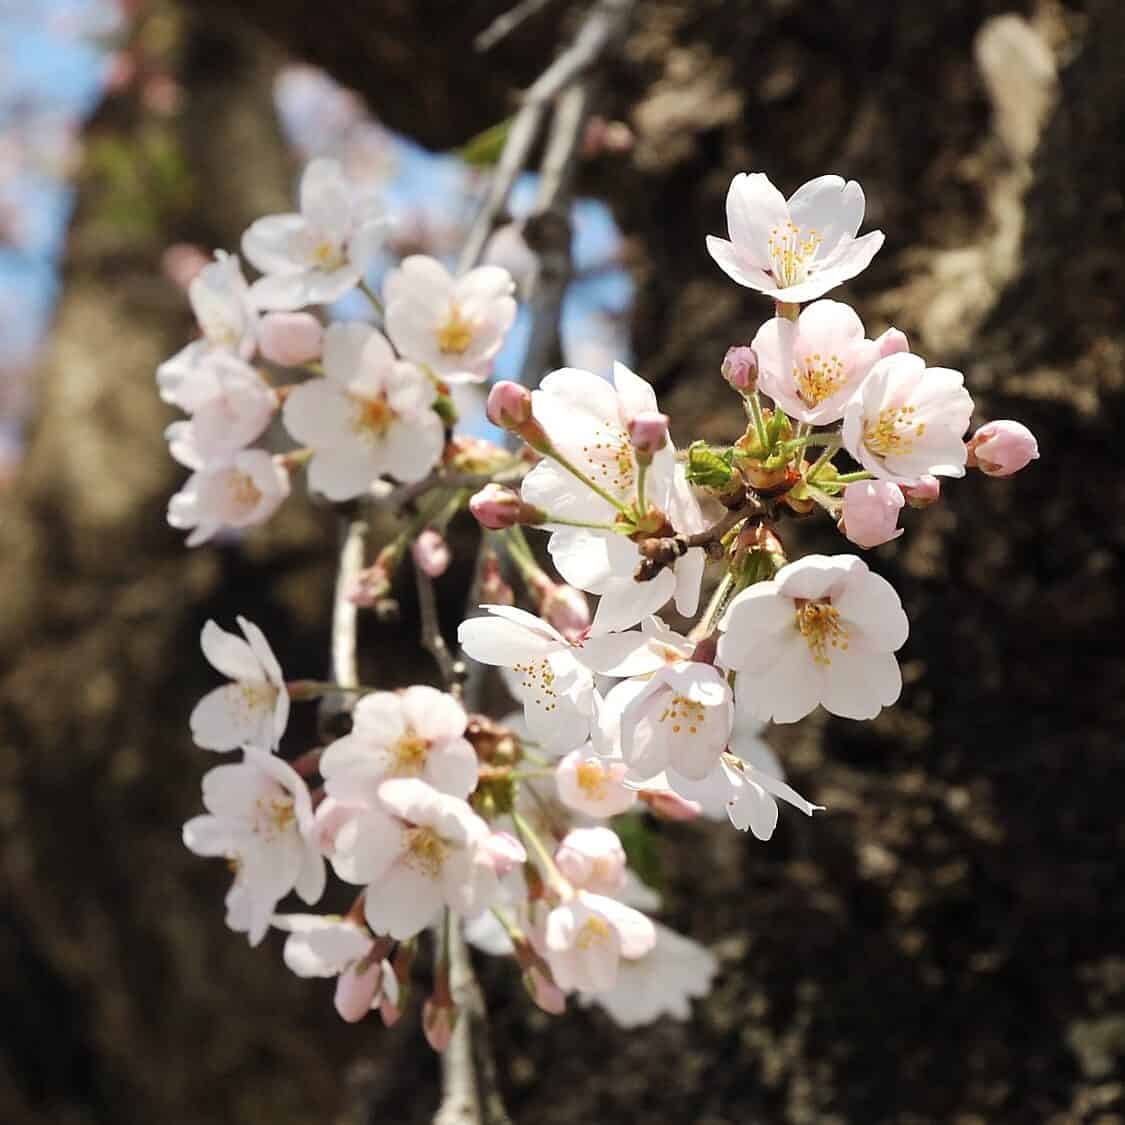 Fleurs de cerisier (Prunus serrulata) - photo de Kropsoq, printemps 2005